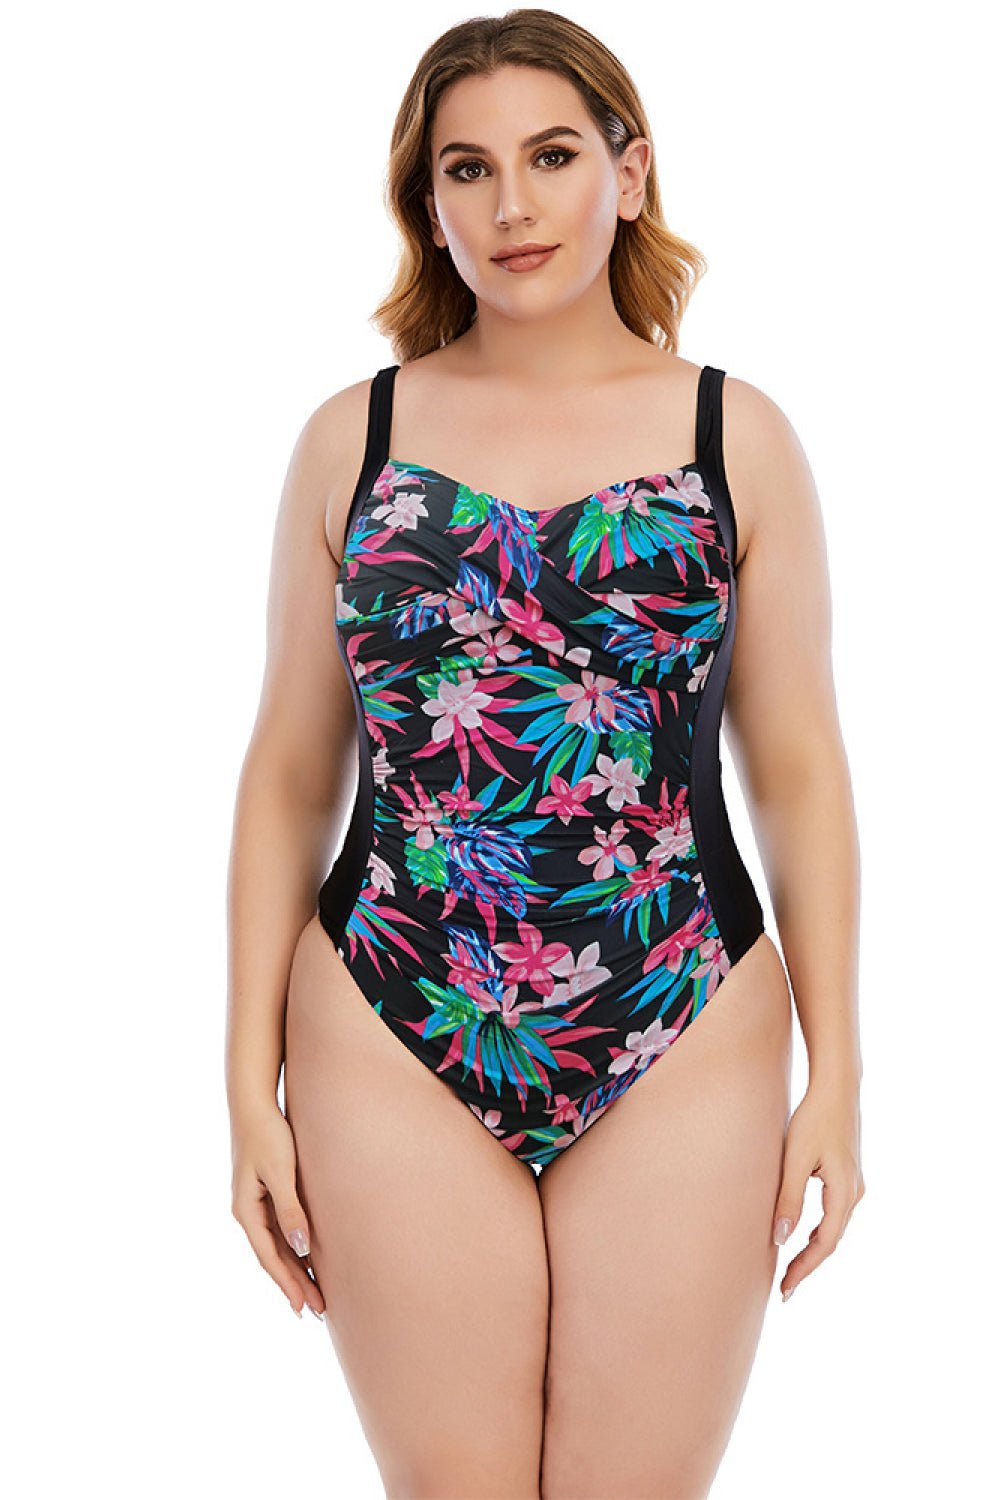 Carol Floral Crisscross One-Piece Plus Size Swimsuit  Sunset and Swim Black/Blue M 